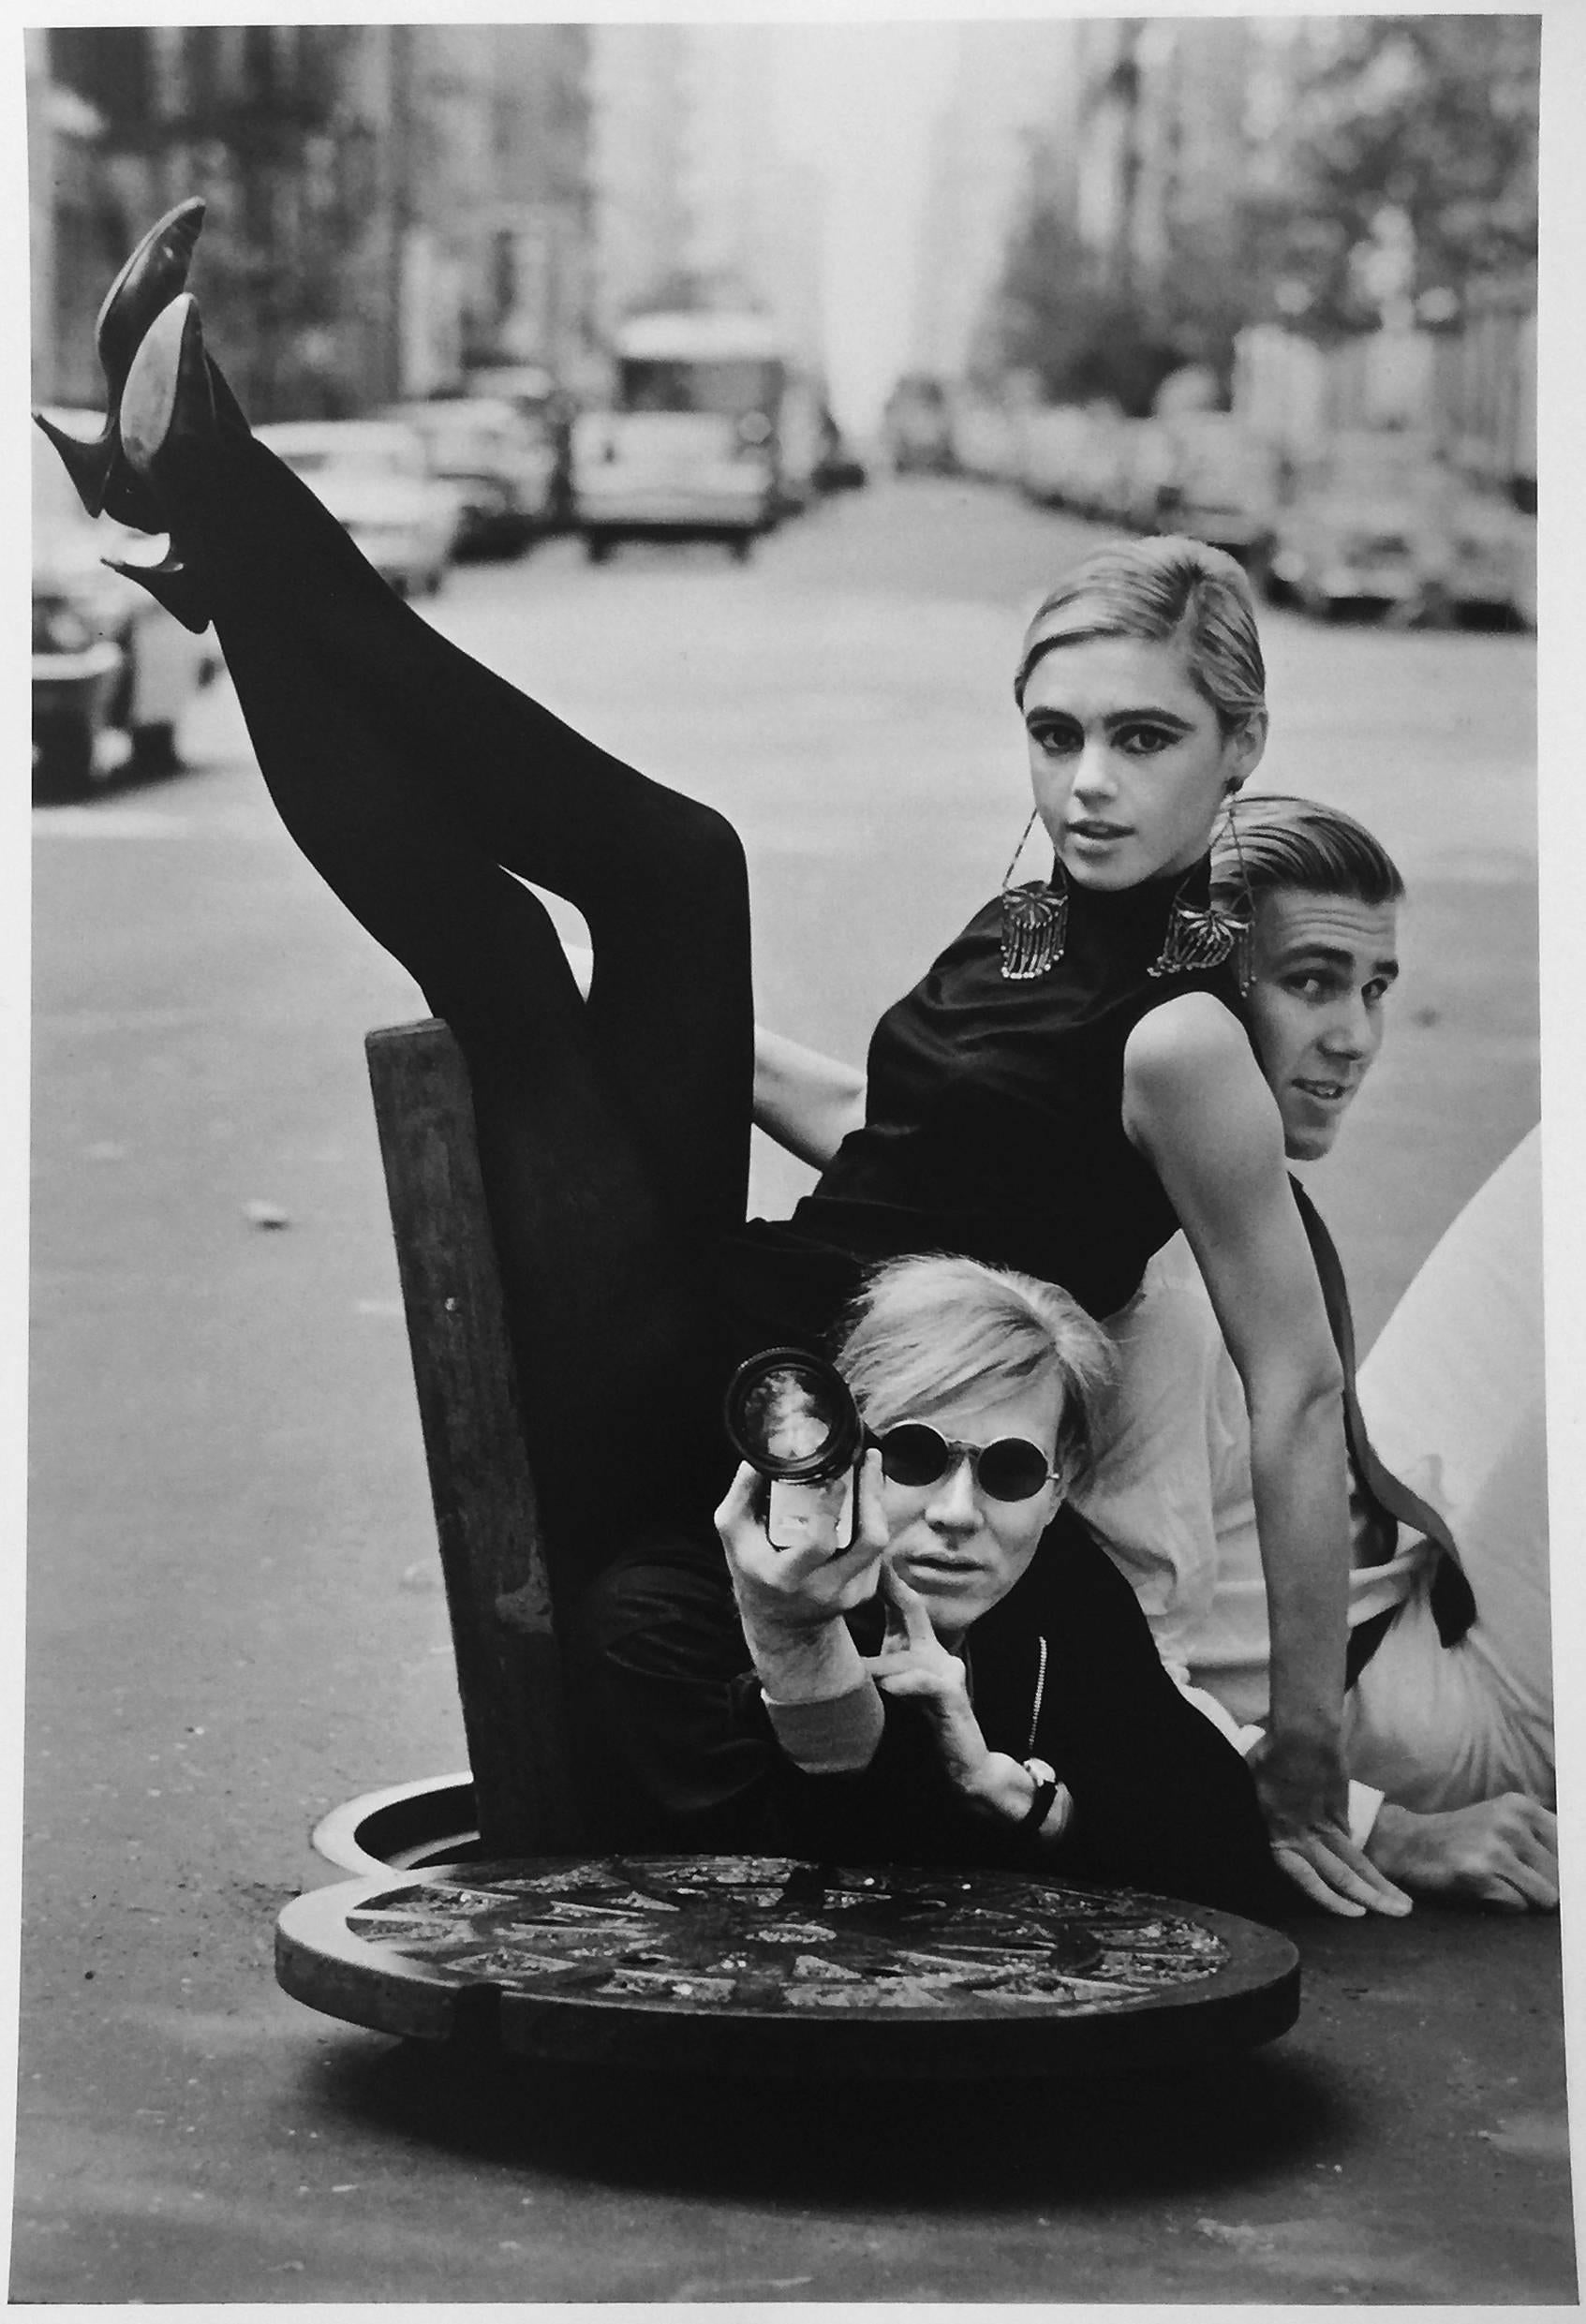 Burt Glinn Portrait Photograph - Andy Warhol, Edie Sedgwick, Chuck Wein, Gelatin Silver, RC